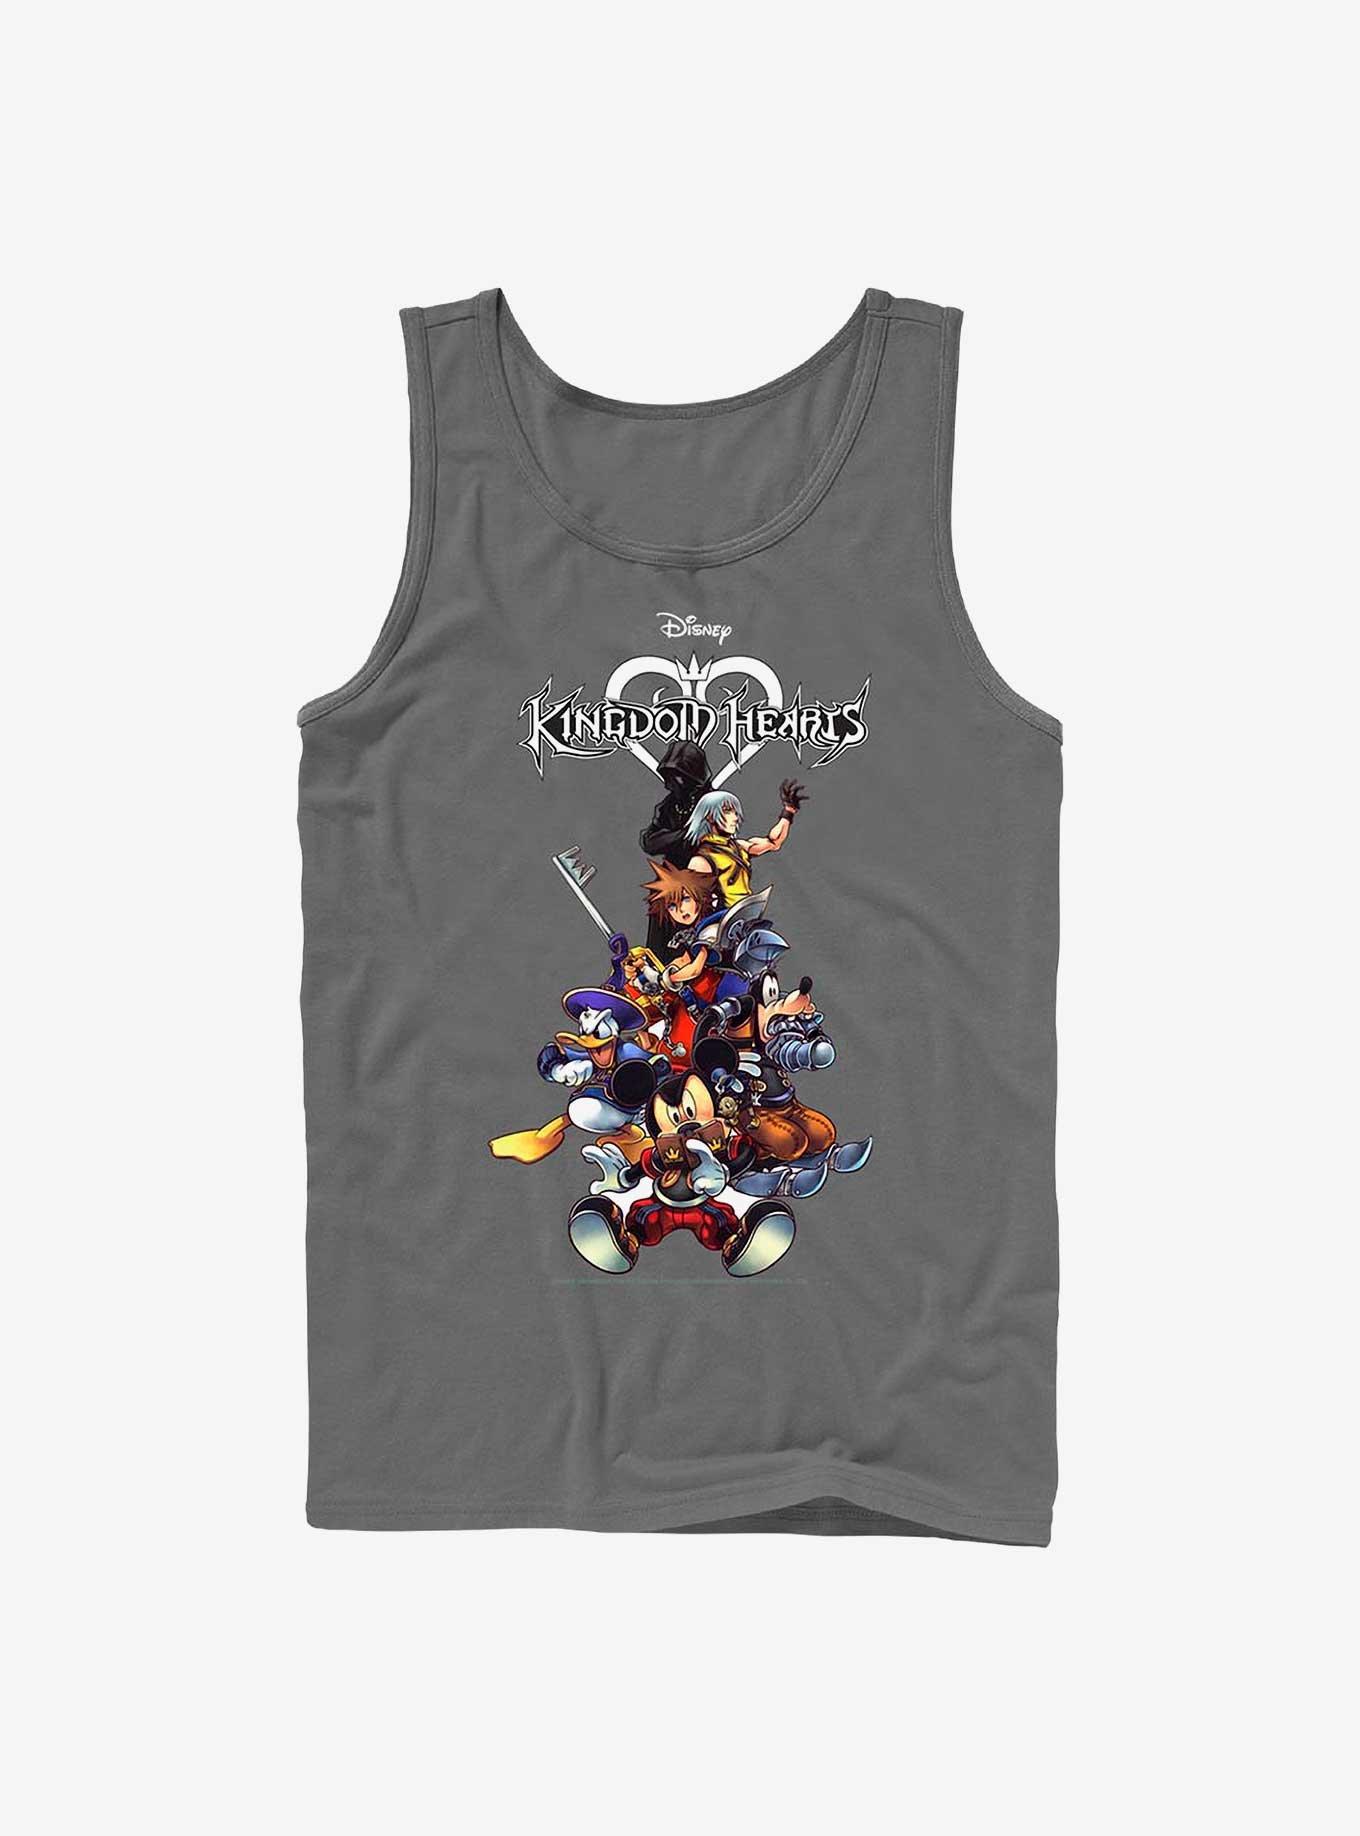 Disney Kingdom Hearts Group With Logo Tank